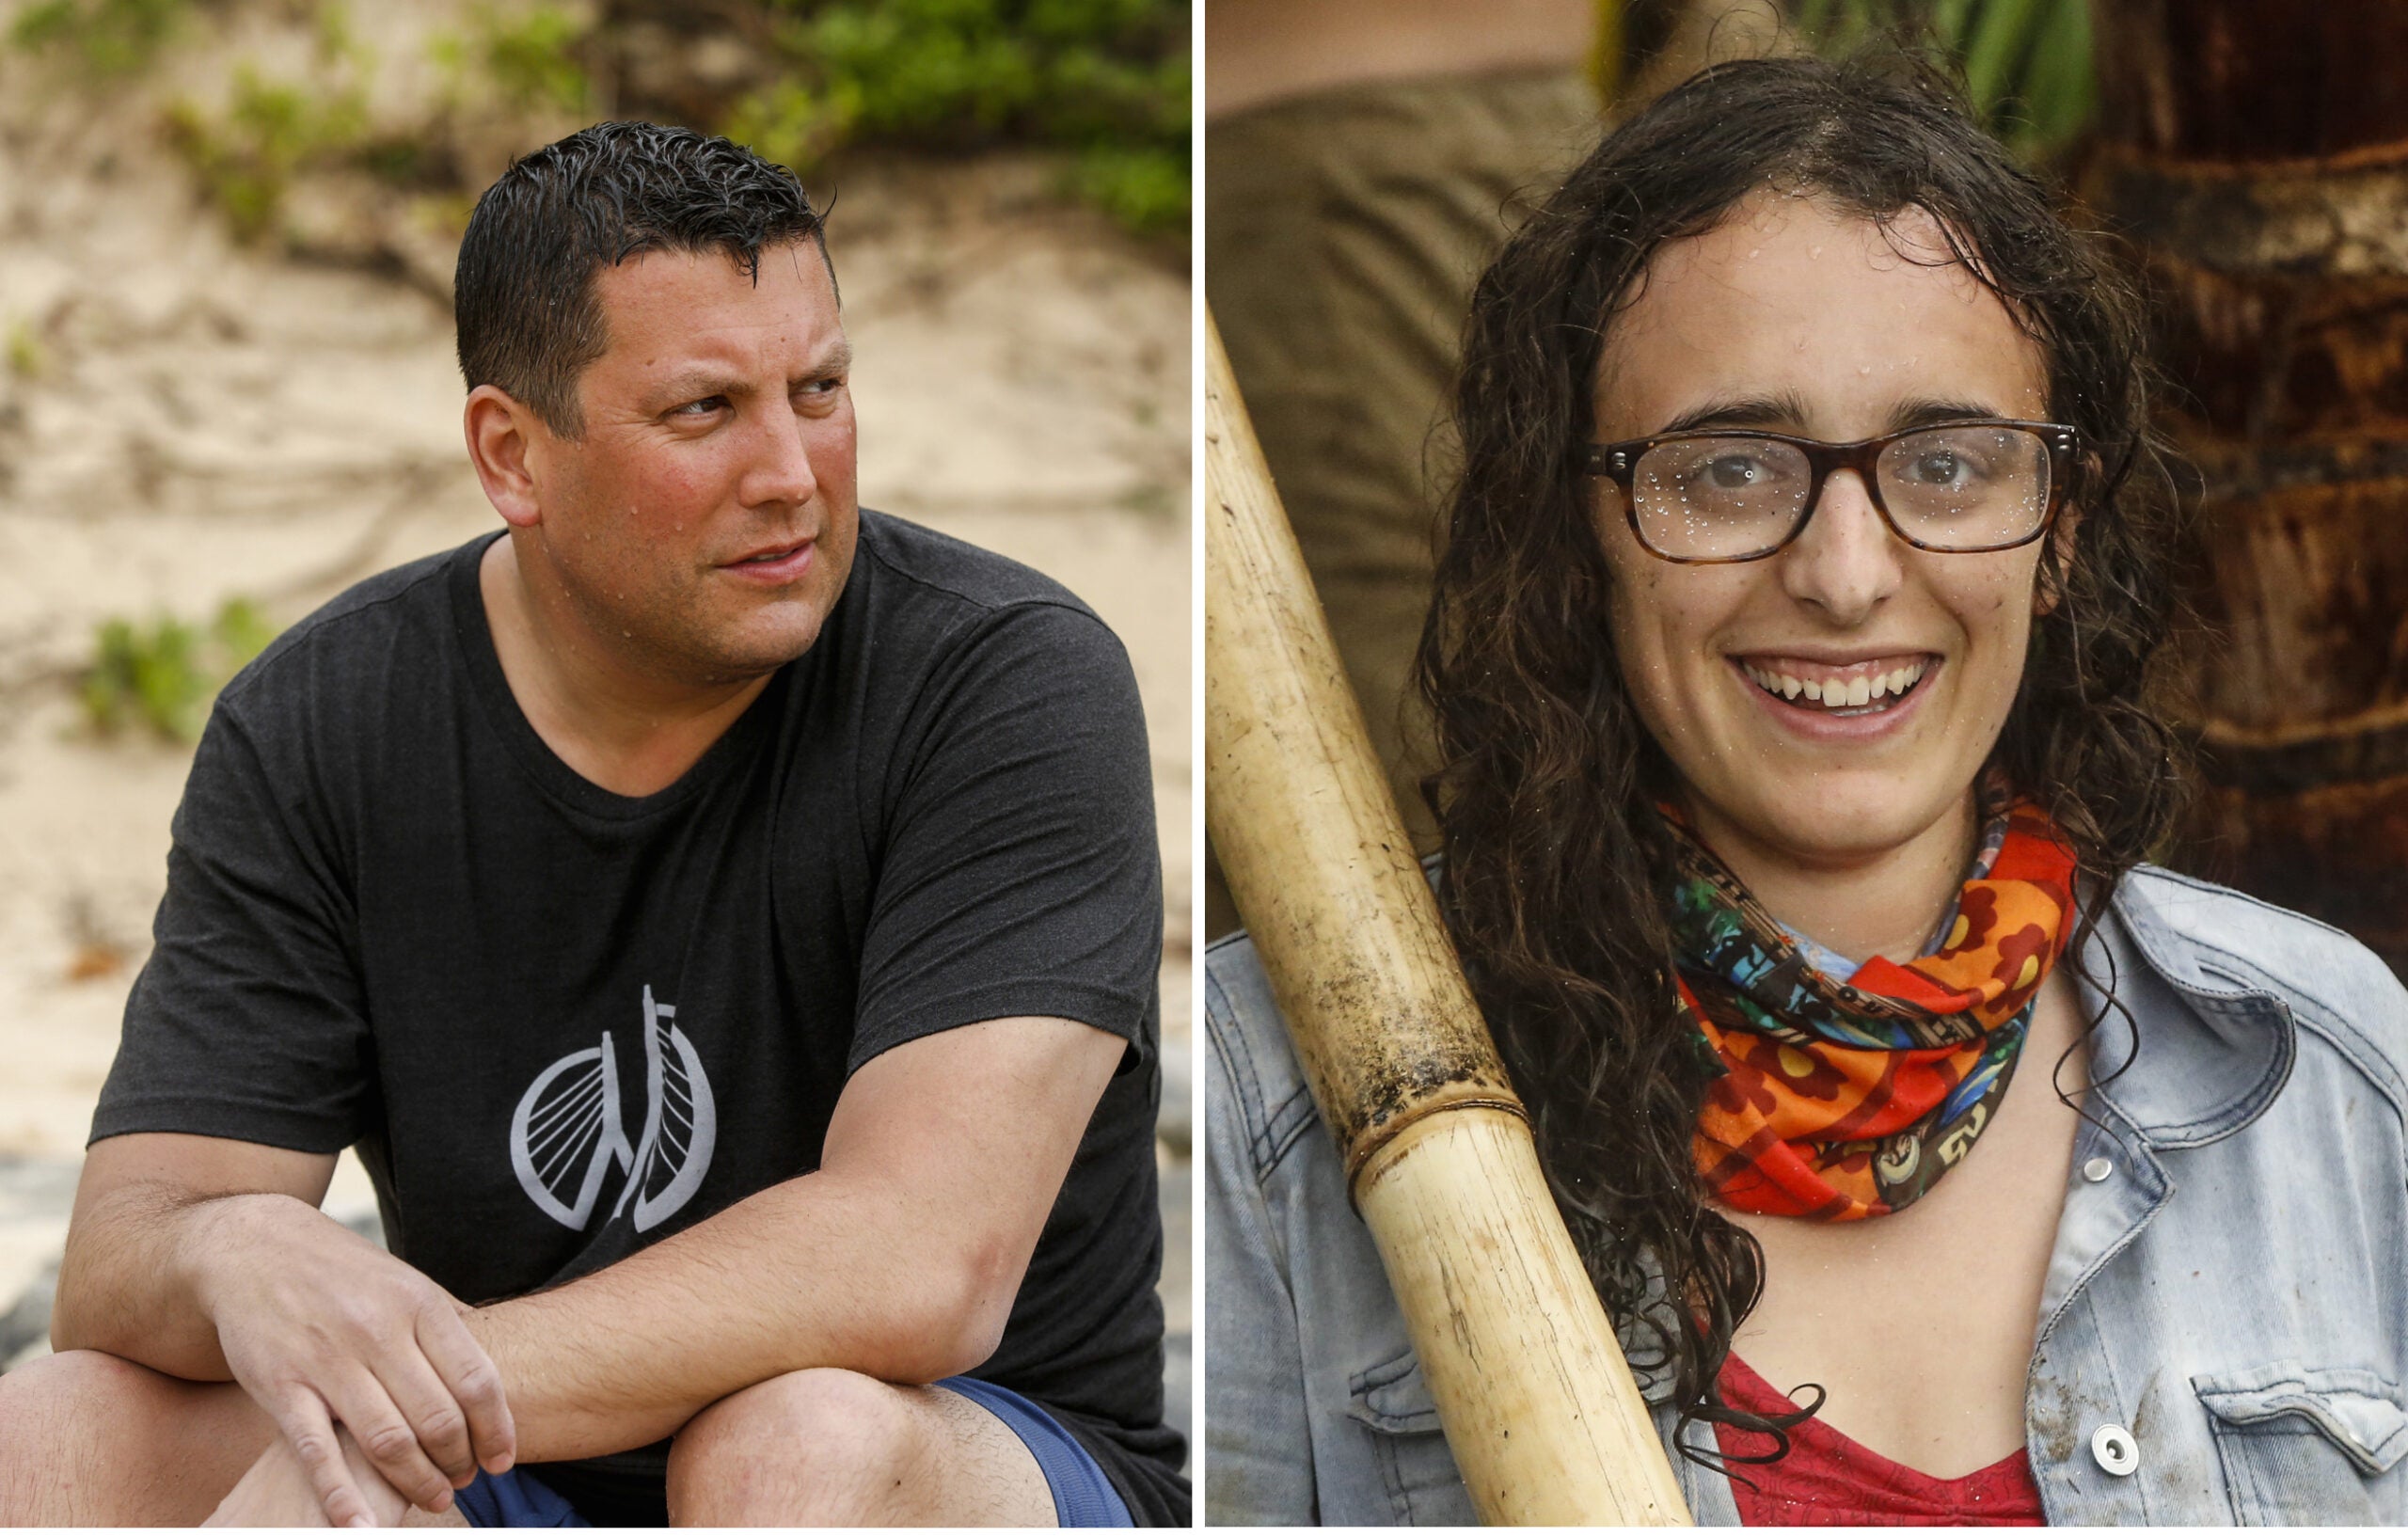 Meet the two new ‘Survivor’ contestants with Massachusetts ties